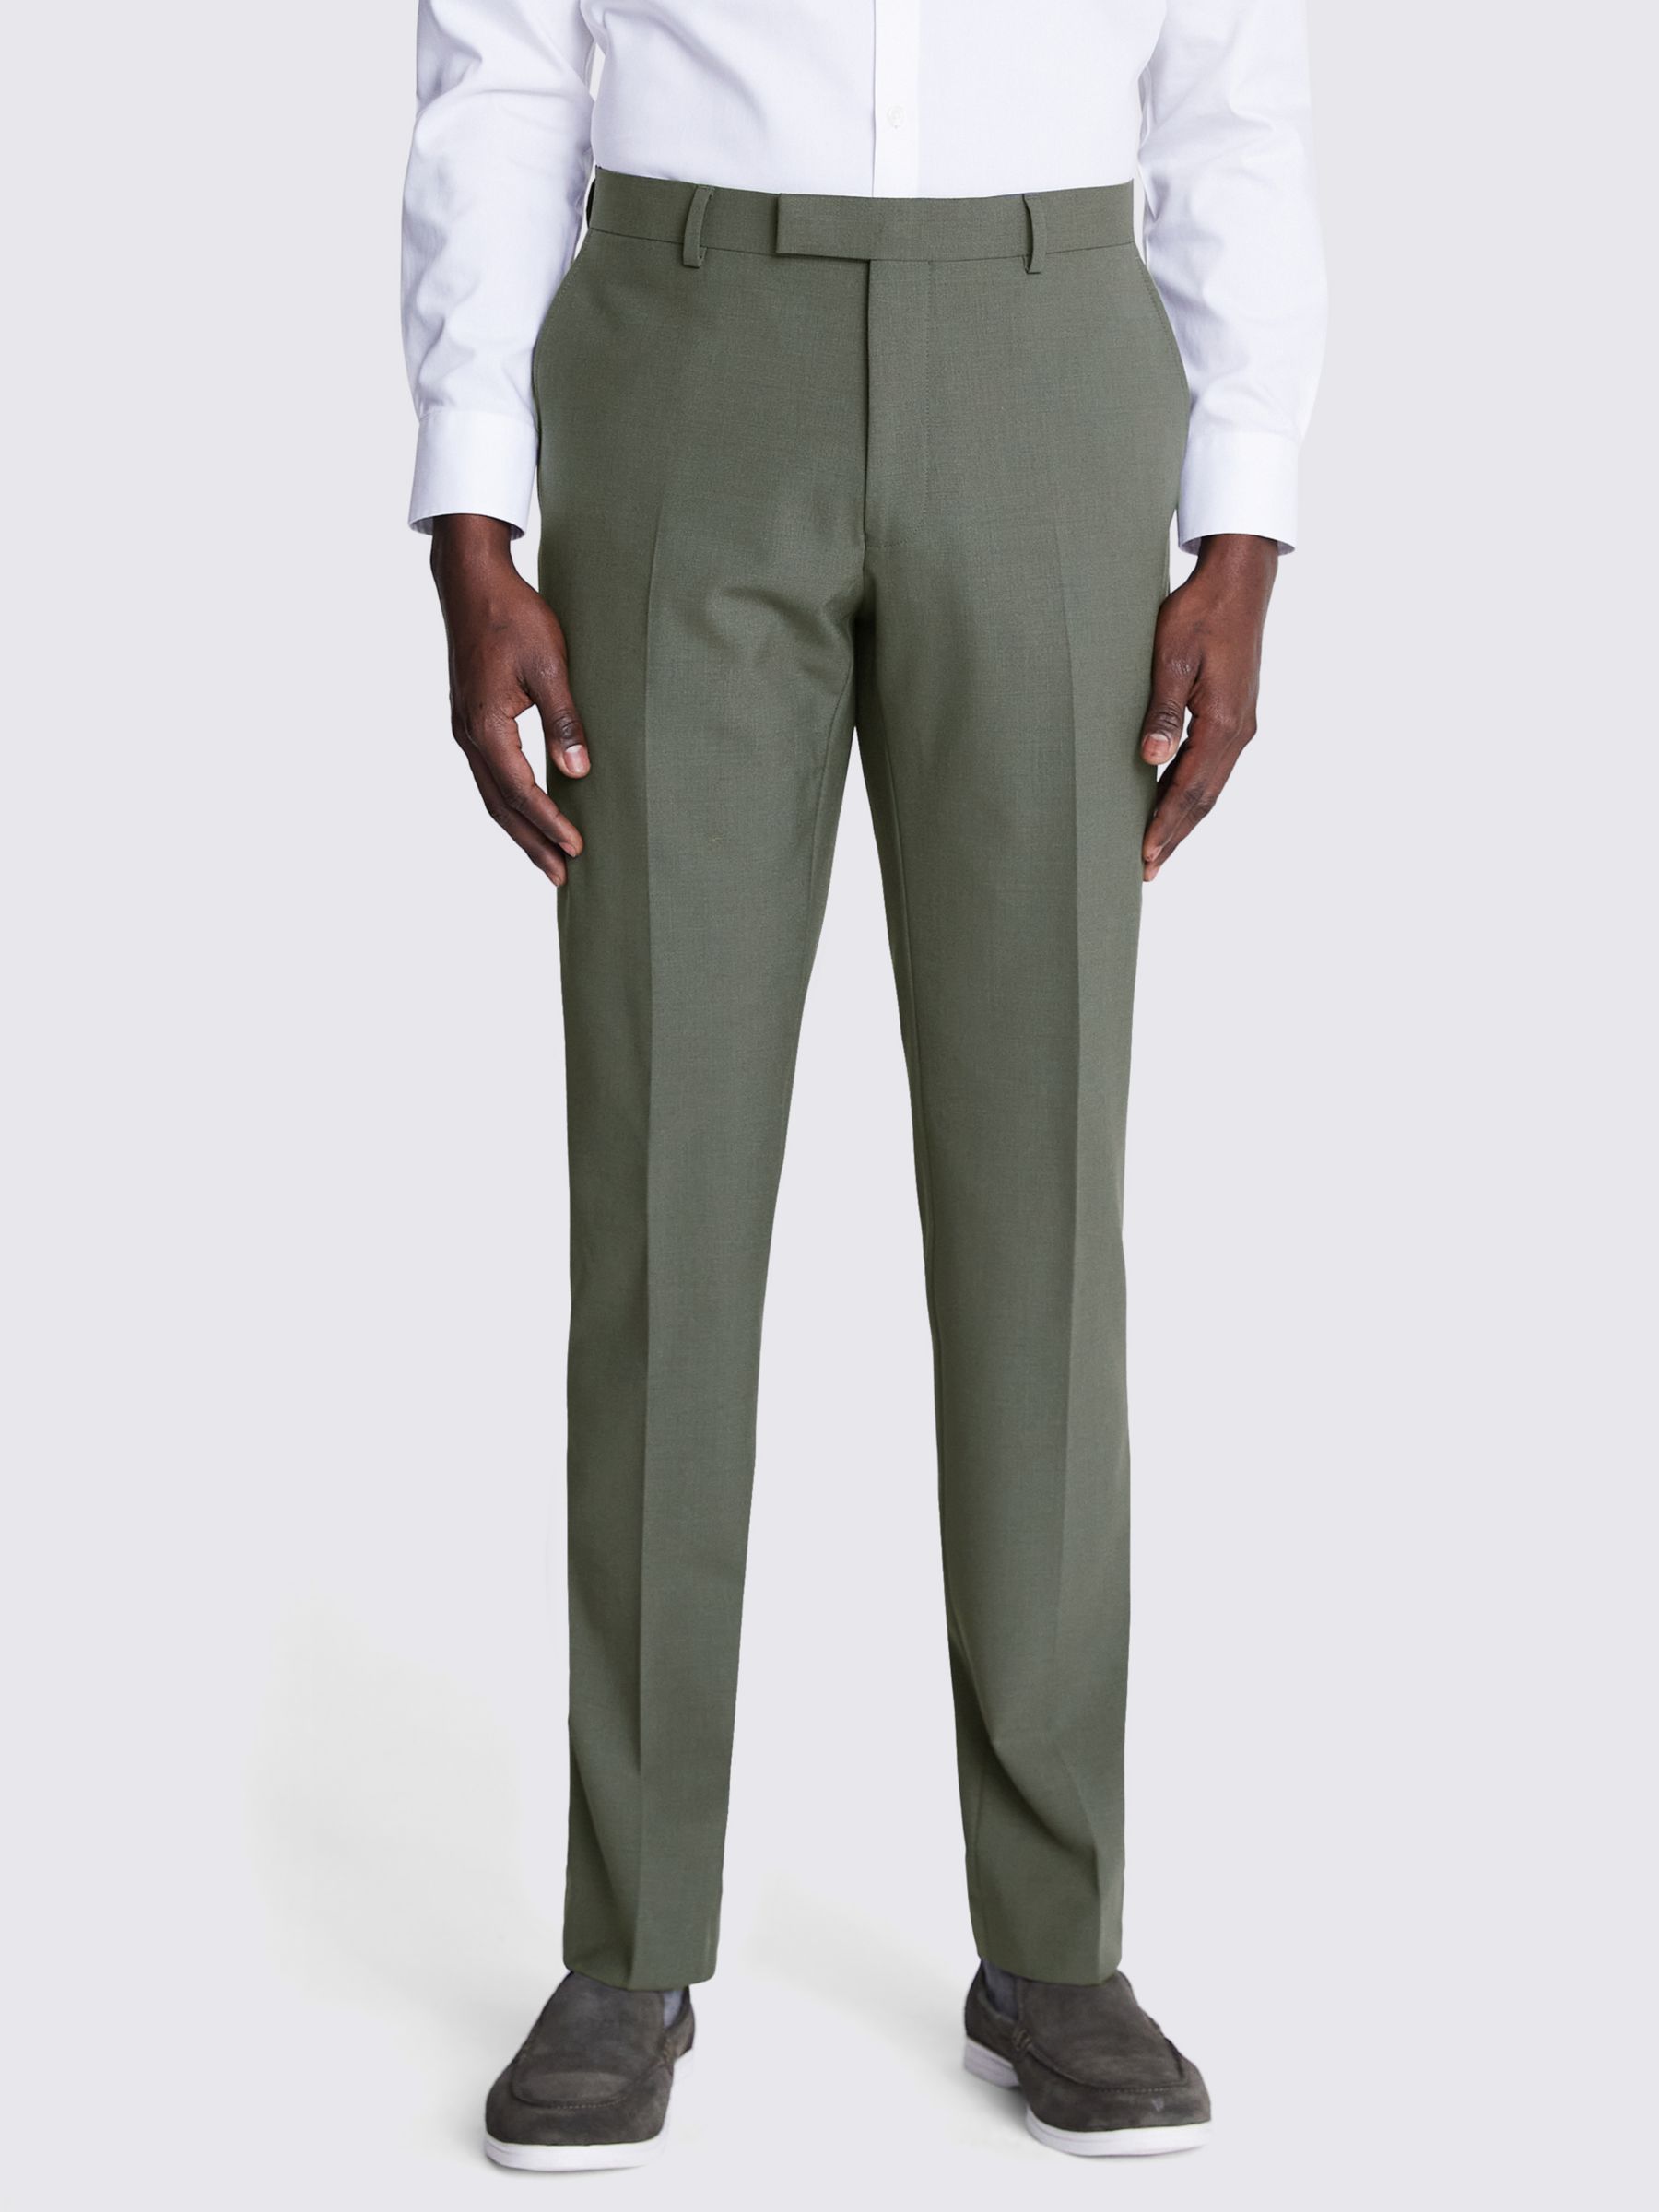 Moss x DKNY Slim Fit Wool Blend Suit Trousers, Sage Green, 32L